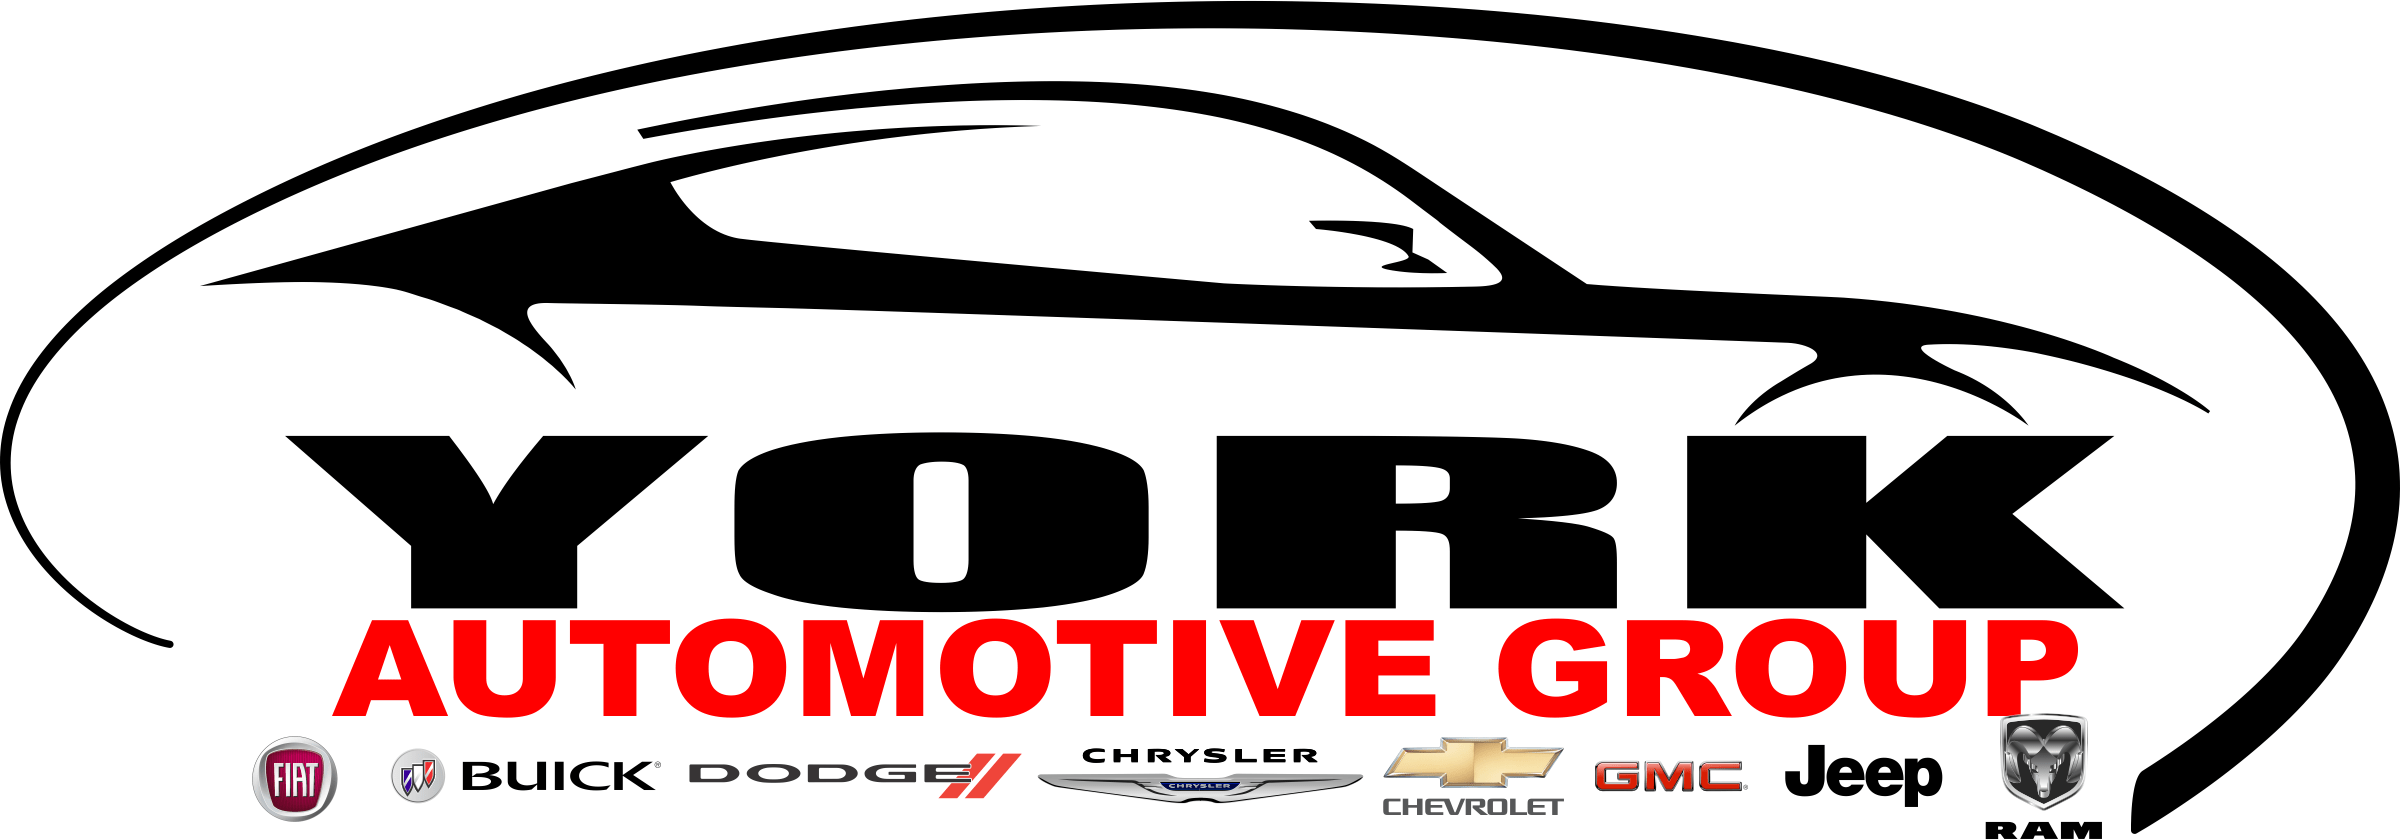 Chrysler Automotive Logo - York Automotive. Buick, GMC, Chevrolet, CDJR Dealer